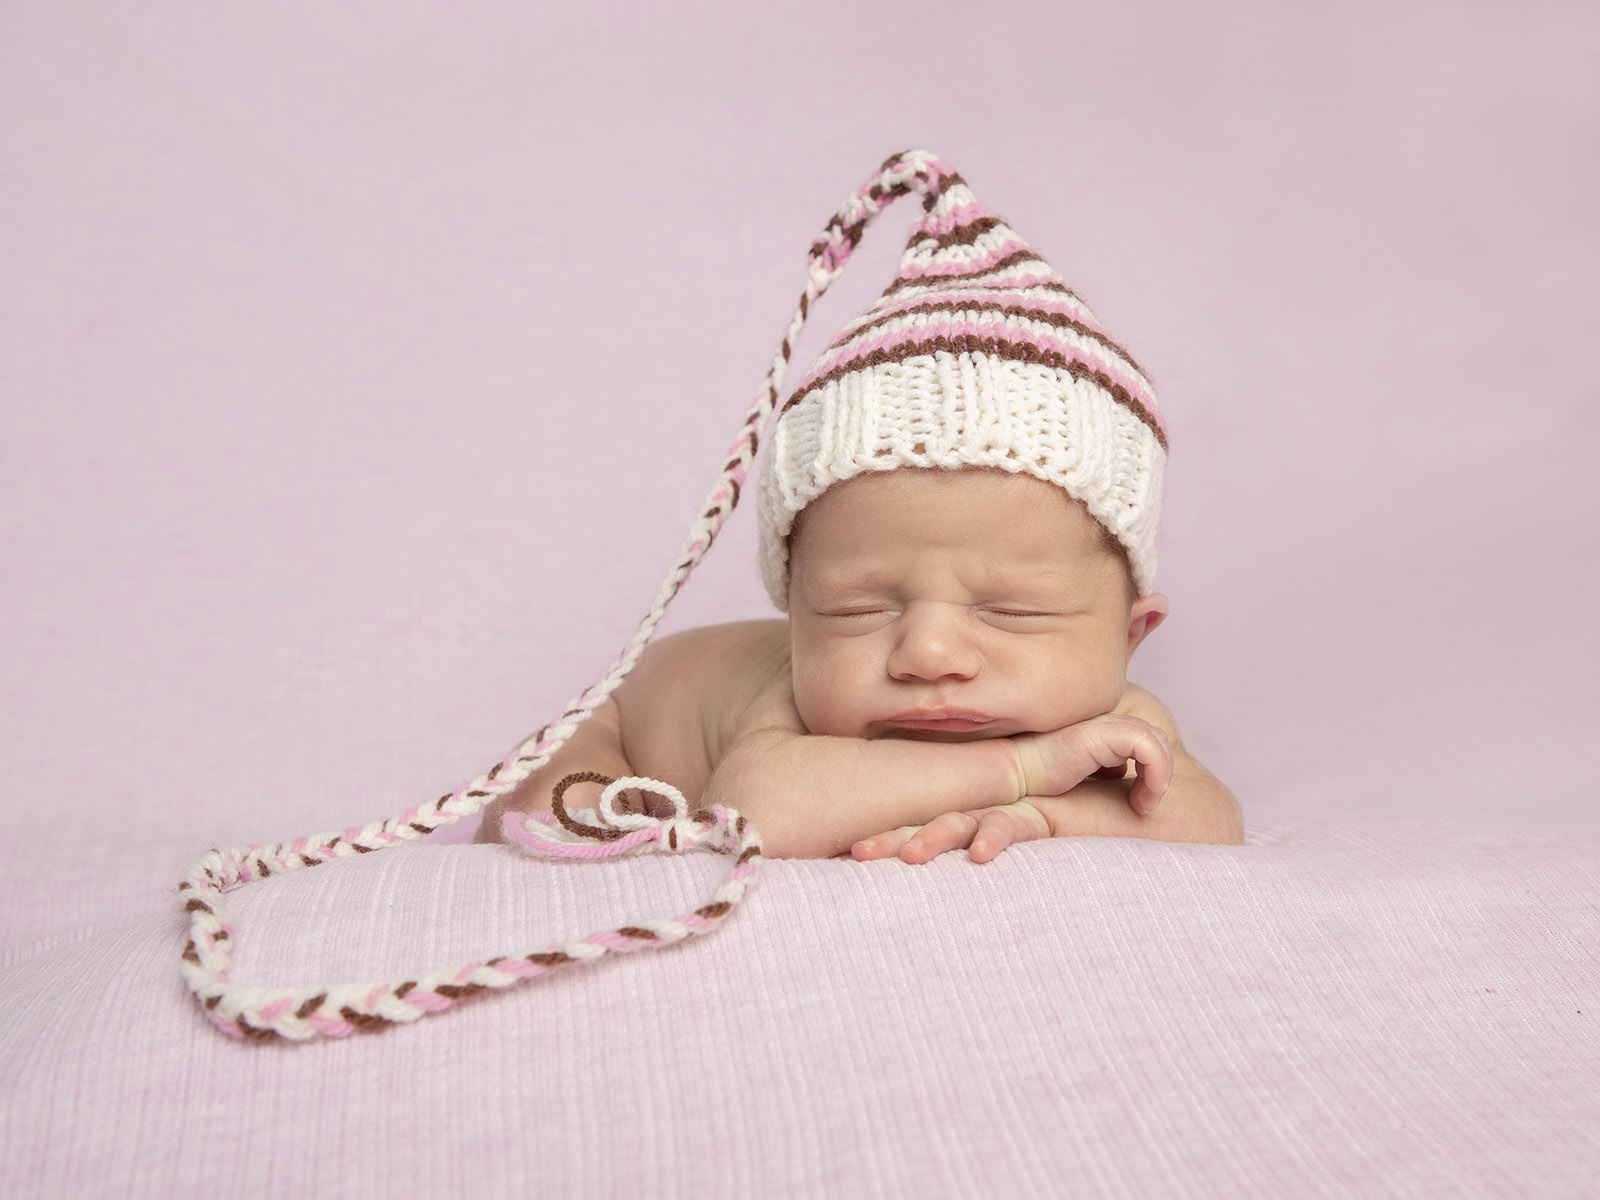 Sleeping newborn with striped hat by newborn photographer Winchester